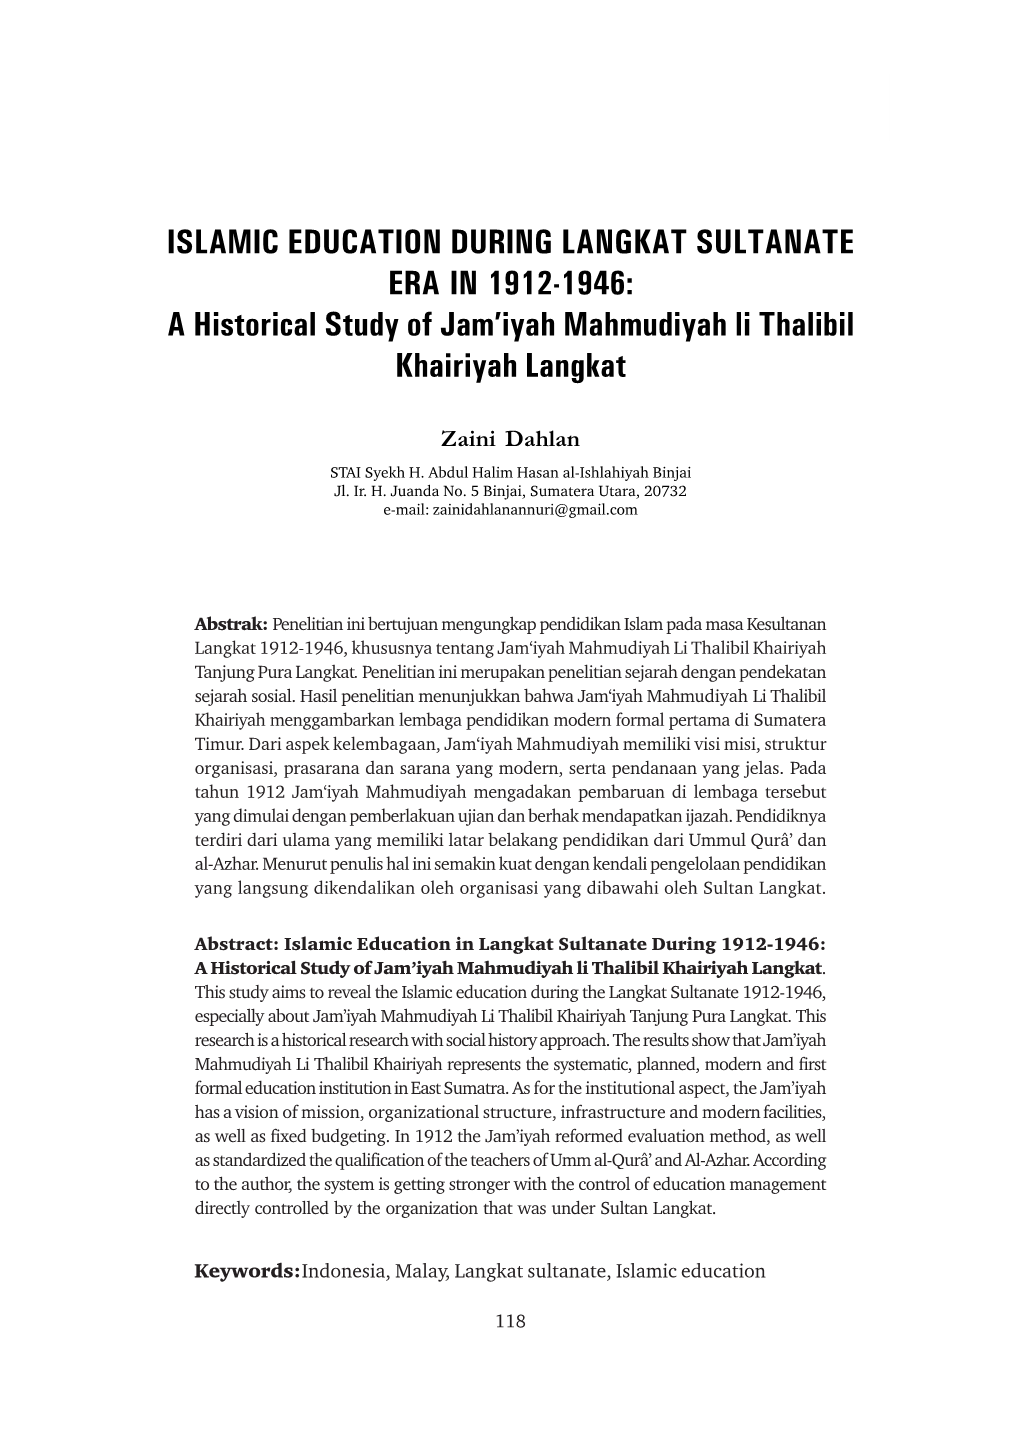 ISLAMIC EDUCATION DURING LANGKAT SULTANATE ERA in 1912-1946: a Historical Study of Jam’Iyah Mahmudiyah Li Thalibil Khairiyah Langkat